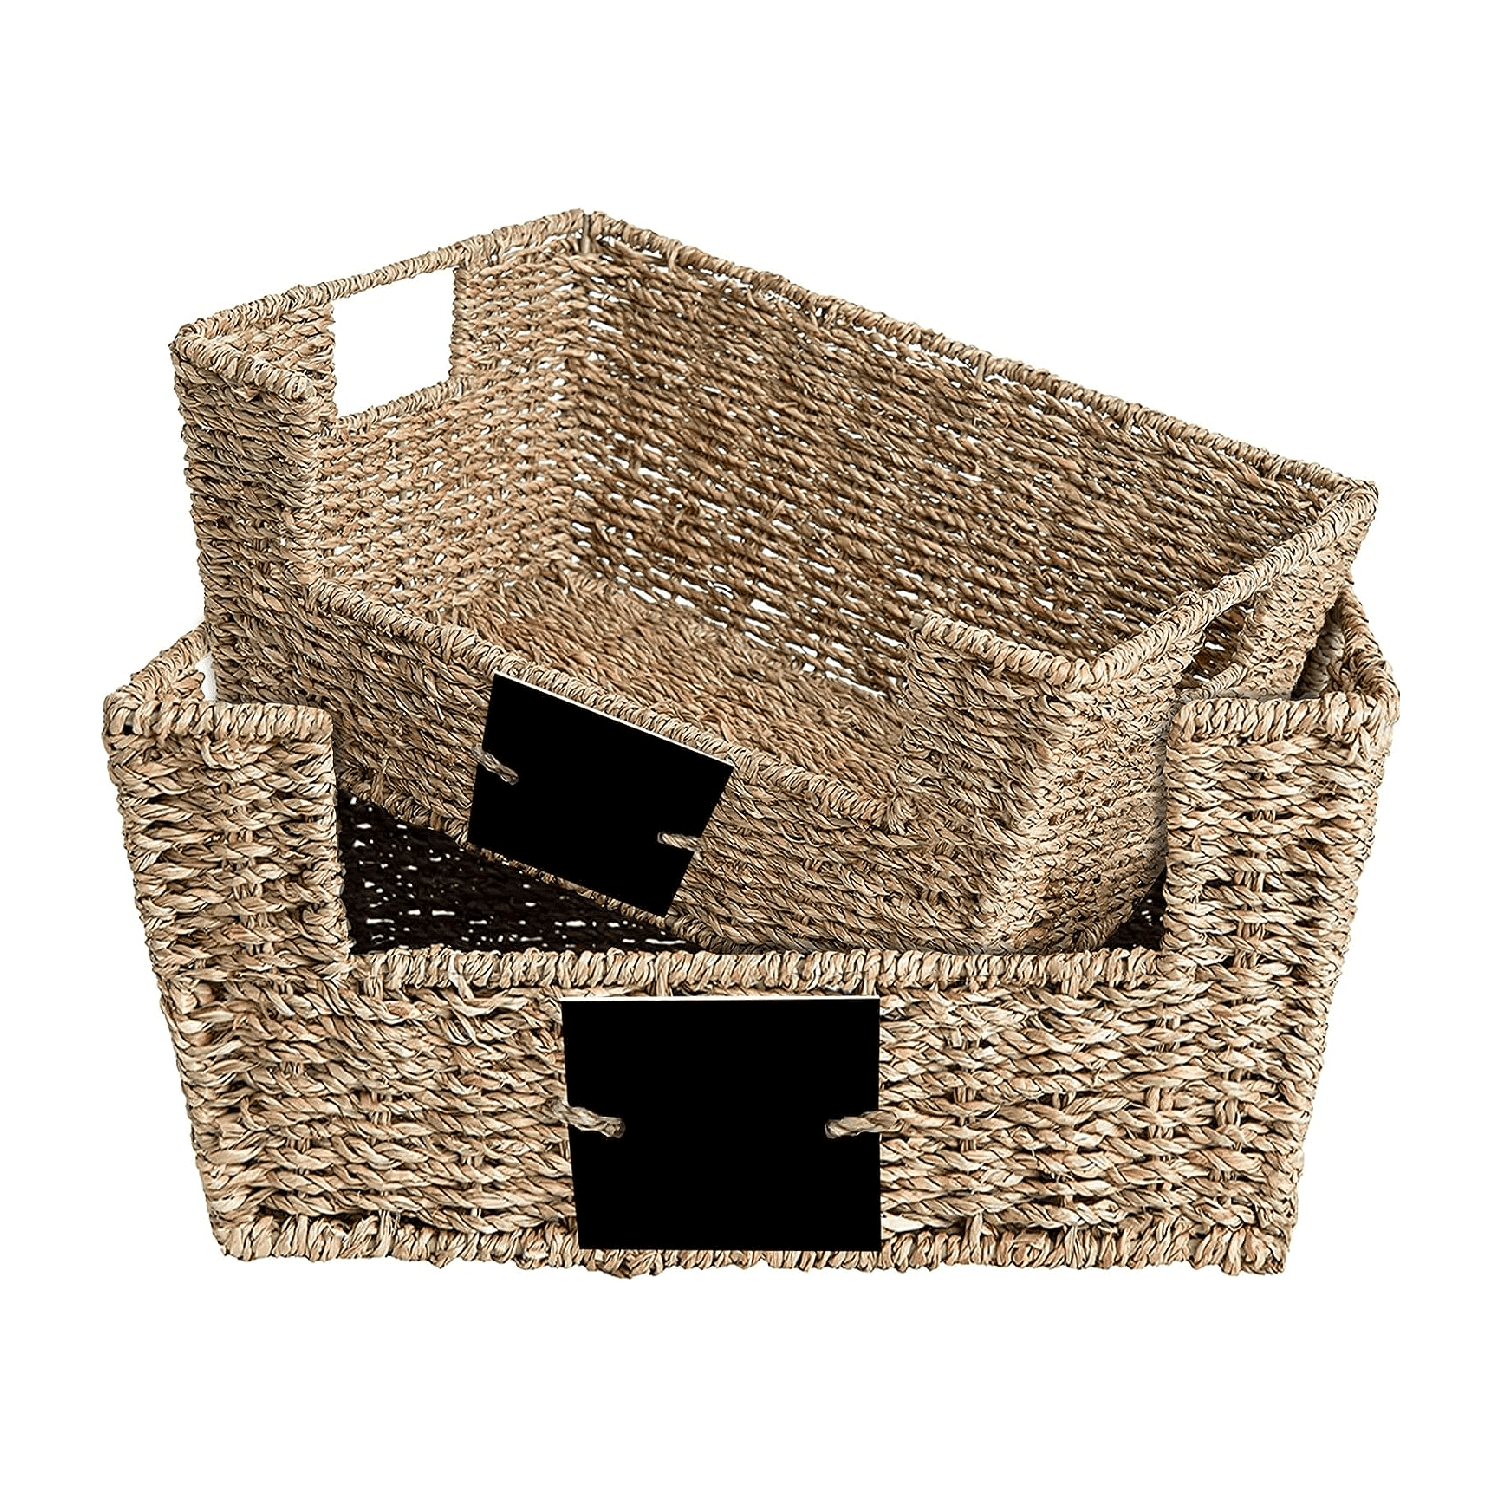 Montessori Outbros Storage Basket Handwoven Wicker Basket Natural